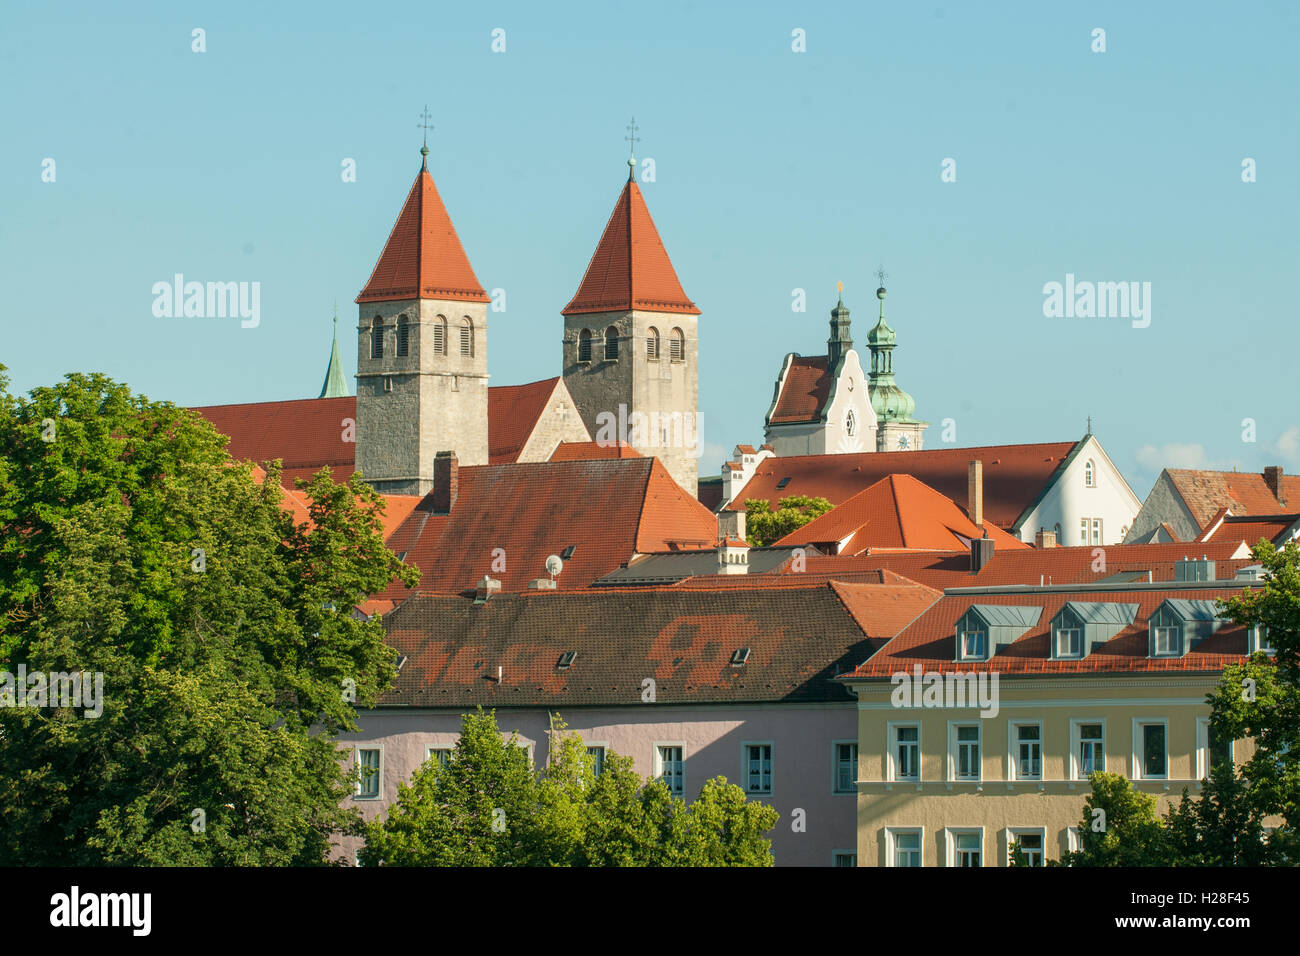 Towers of Niedermunster, Regensburg, Germany Stock Photo